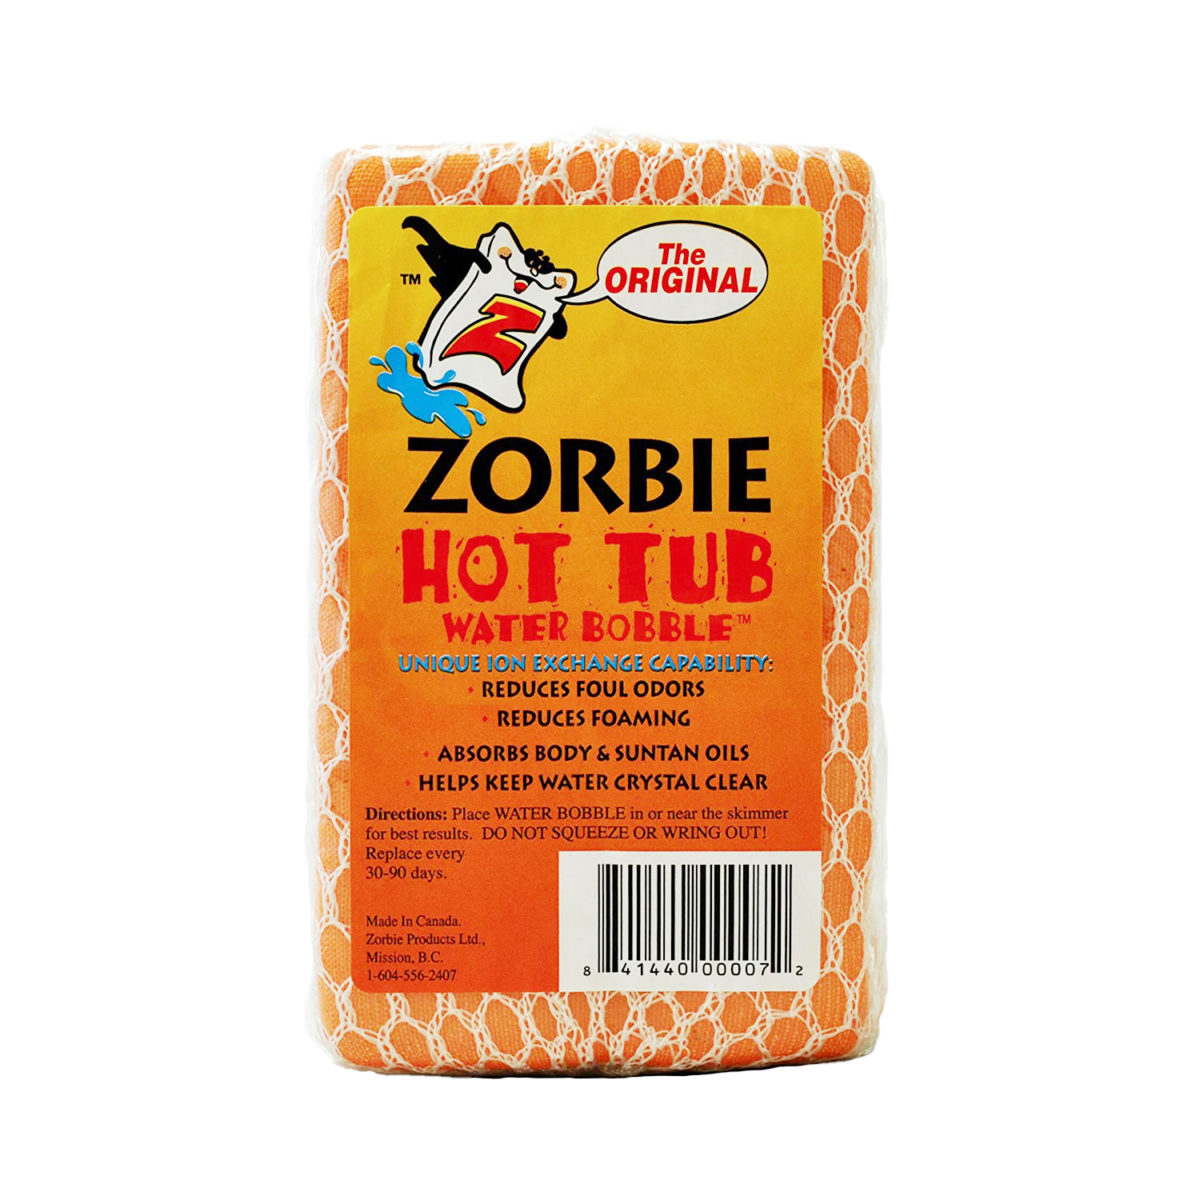 Zorbie Hot Tub Water Bobble Cleaner Orange